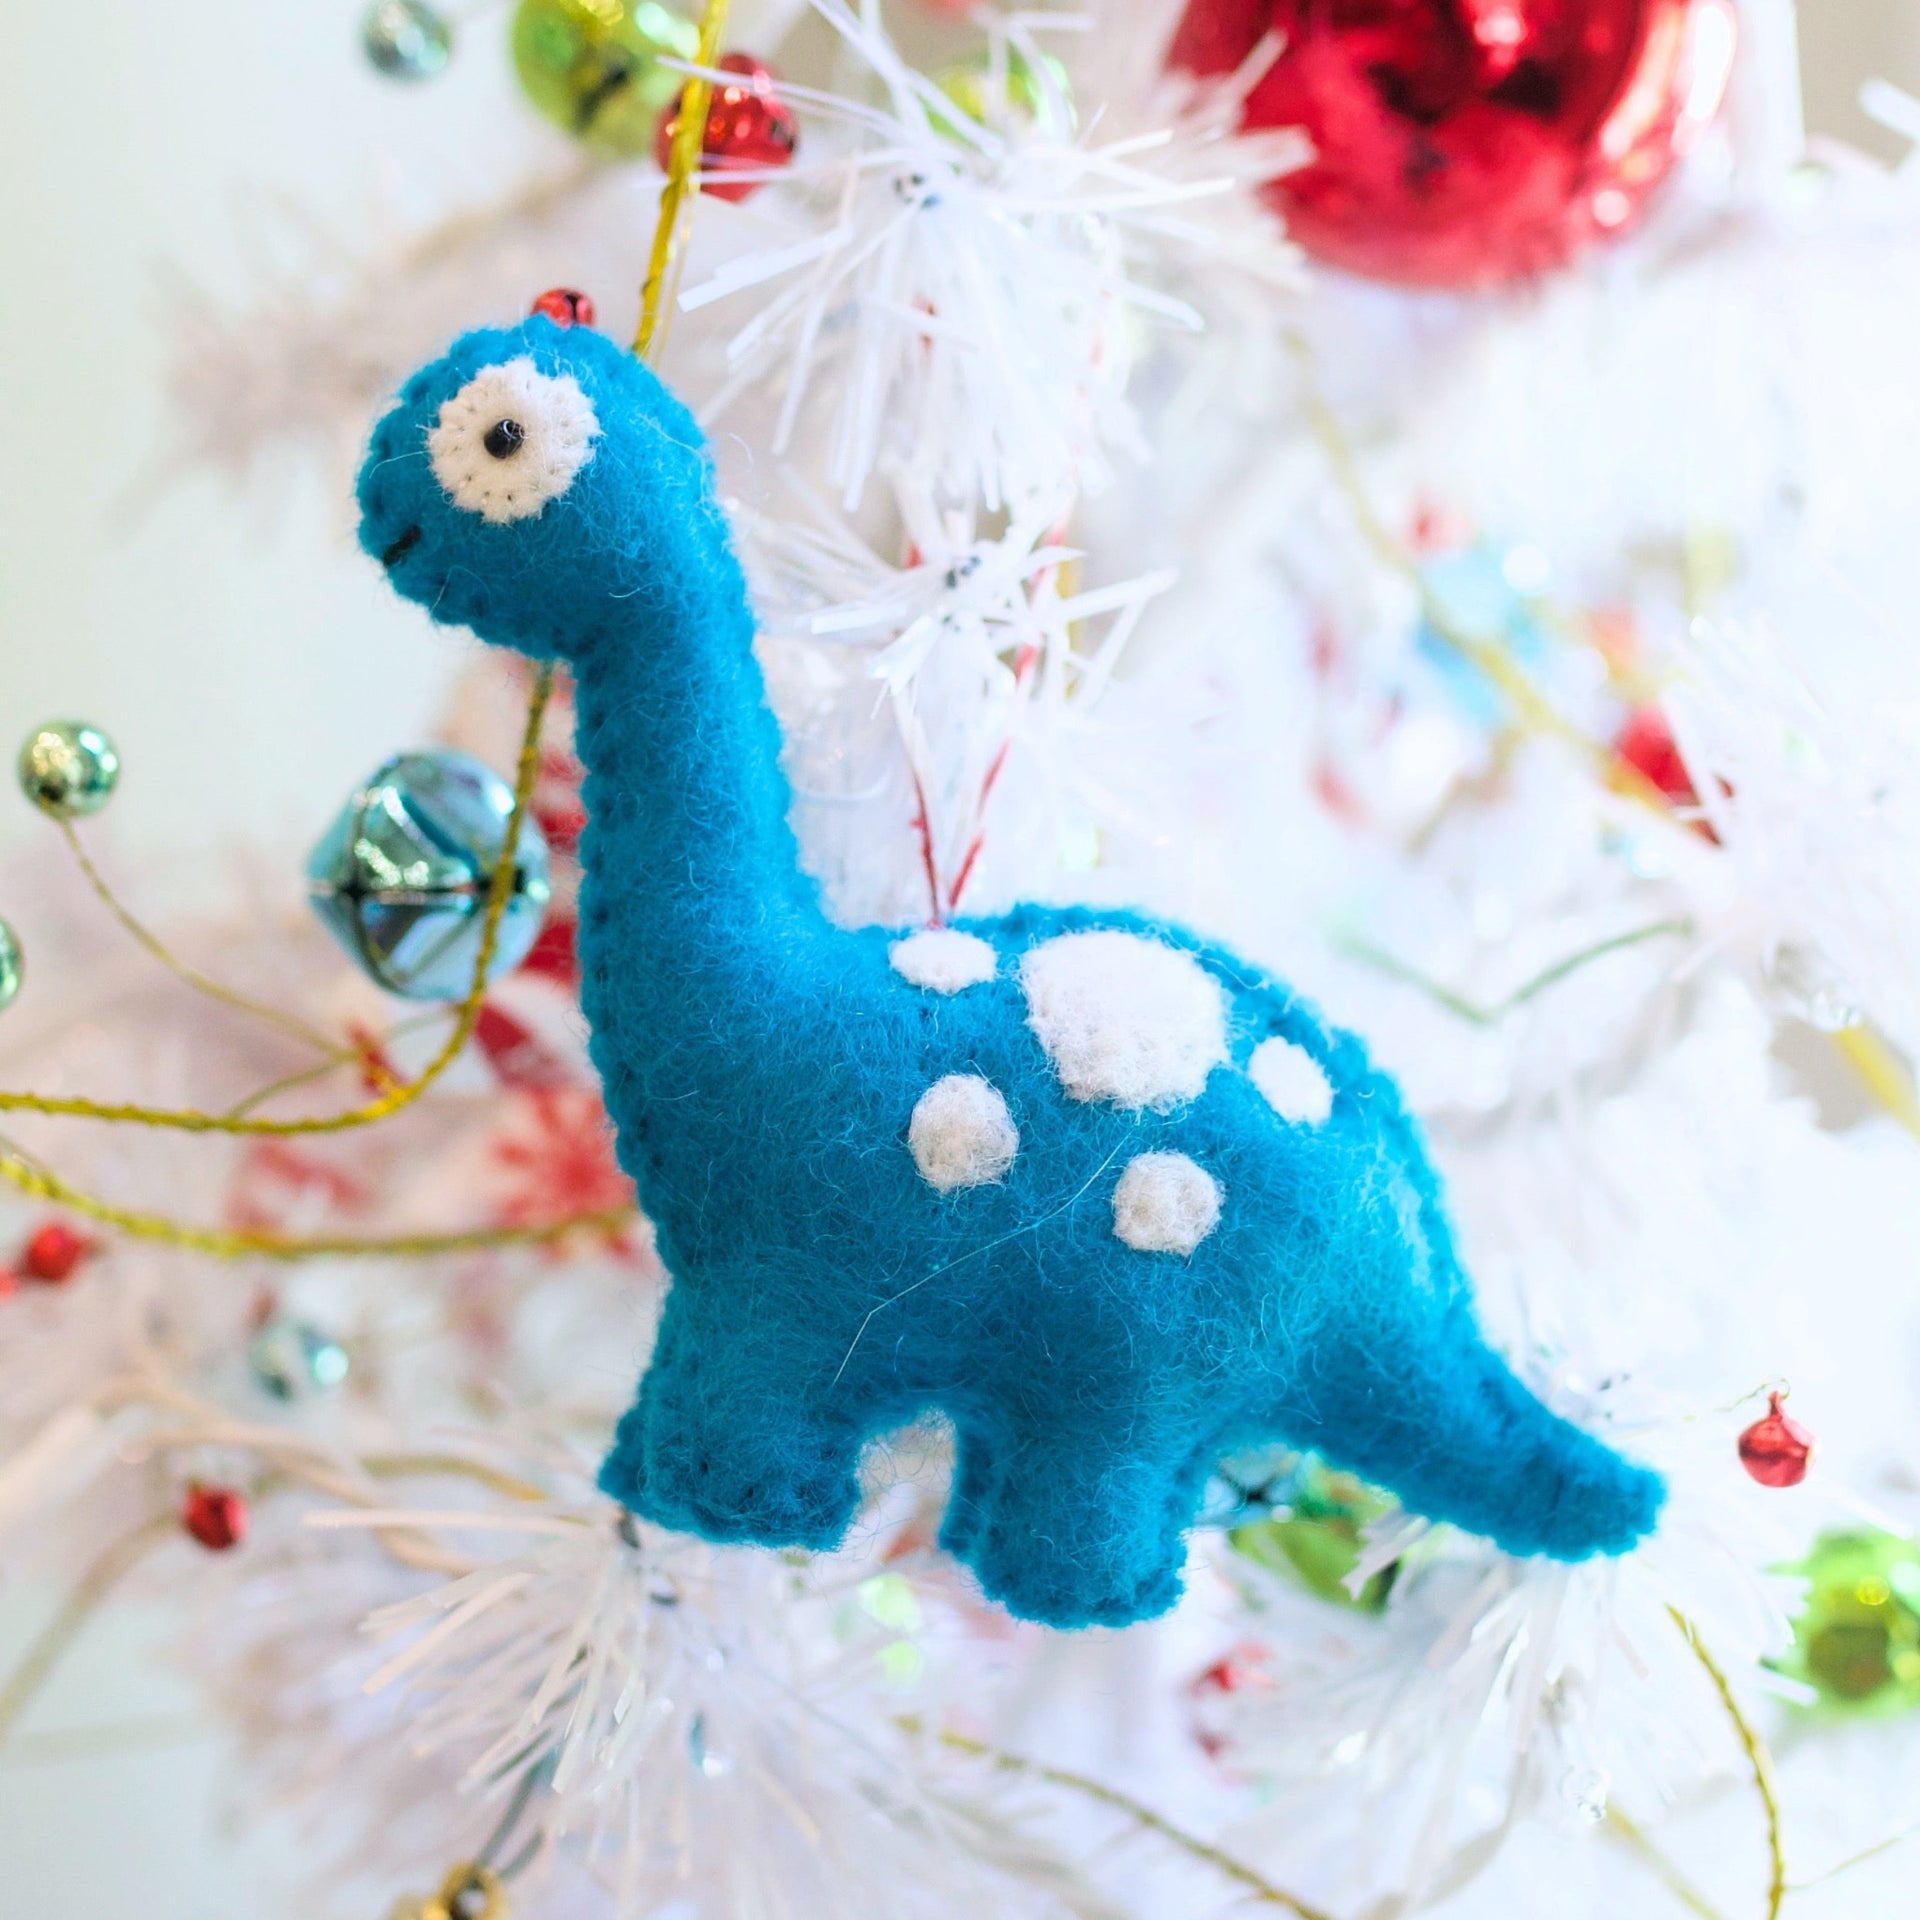 Bright blue dinosaur ornament on Christmas tree